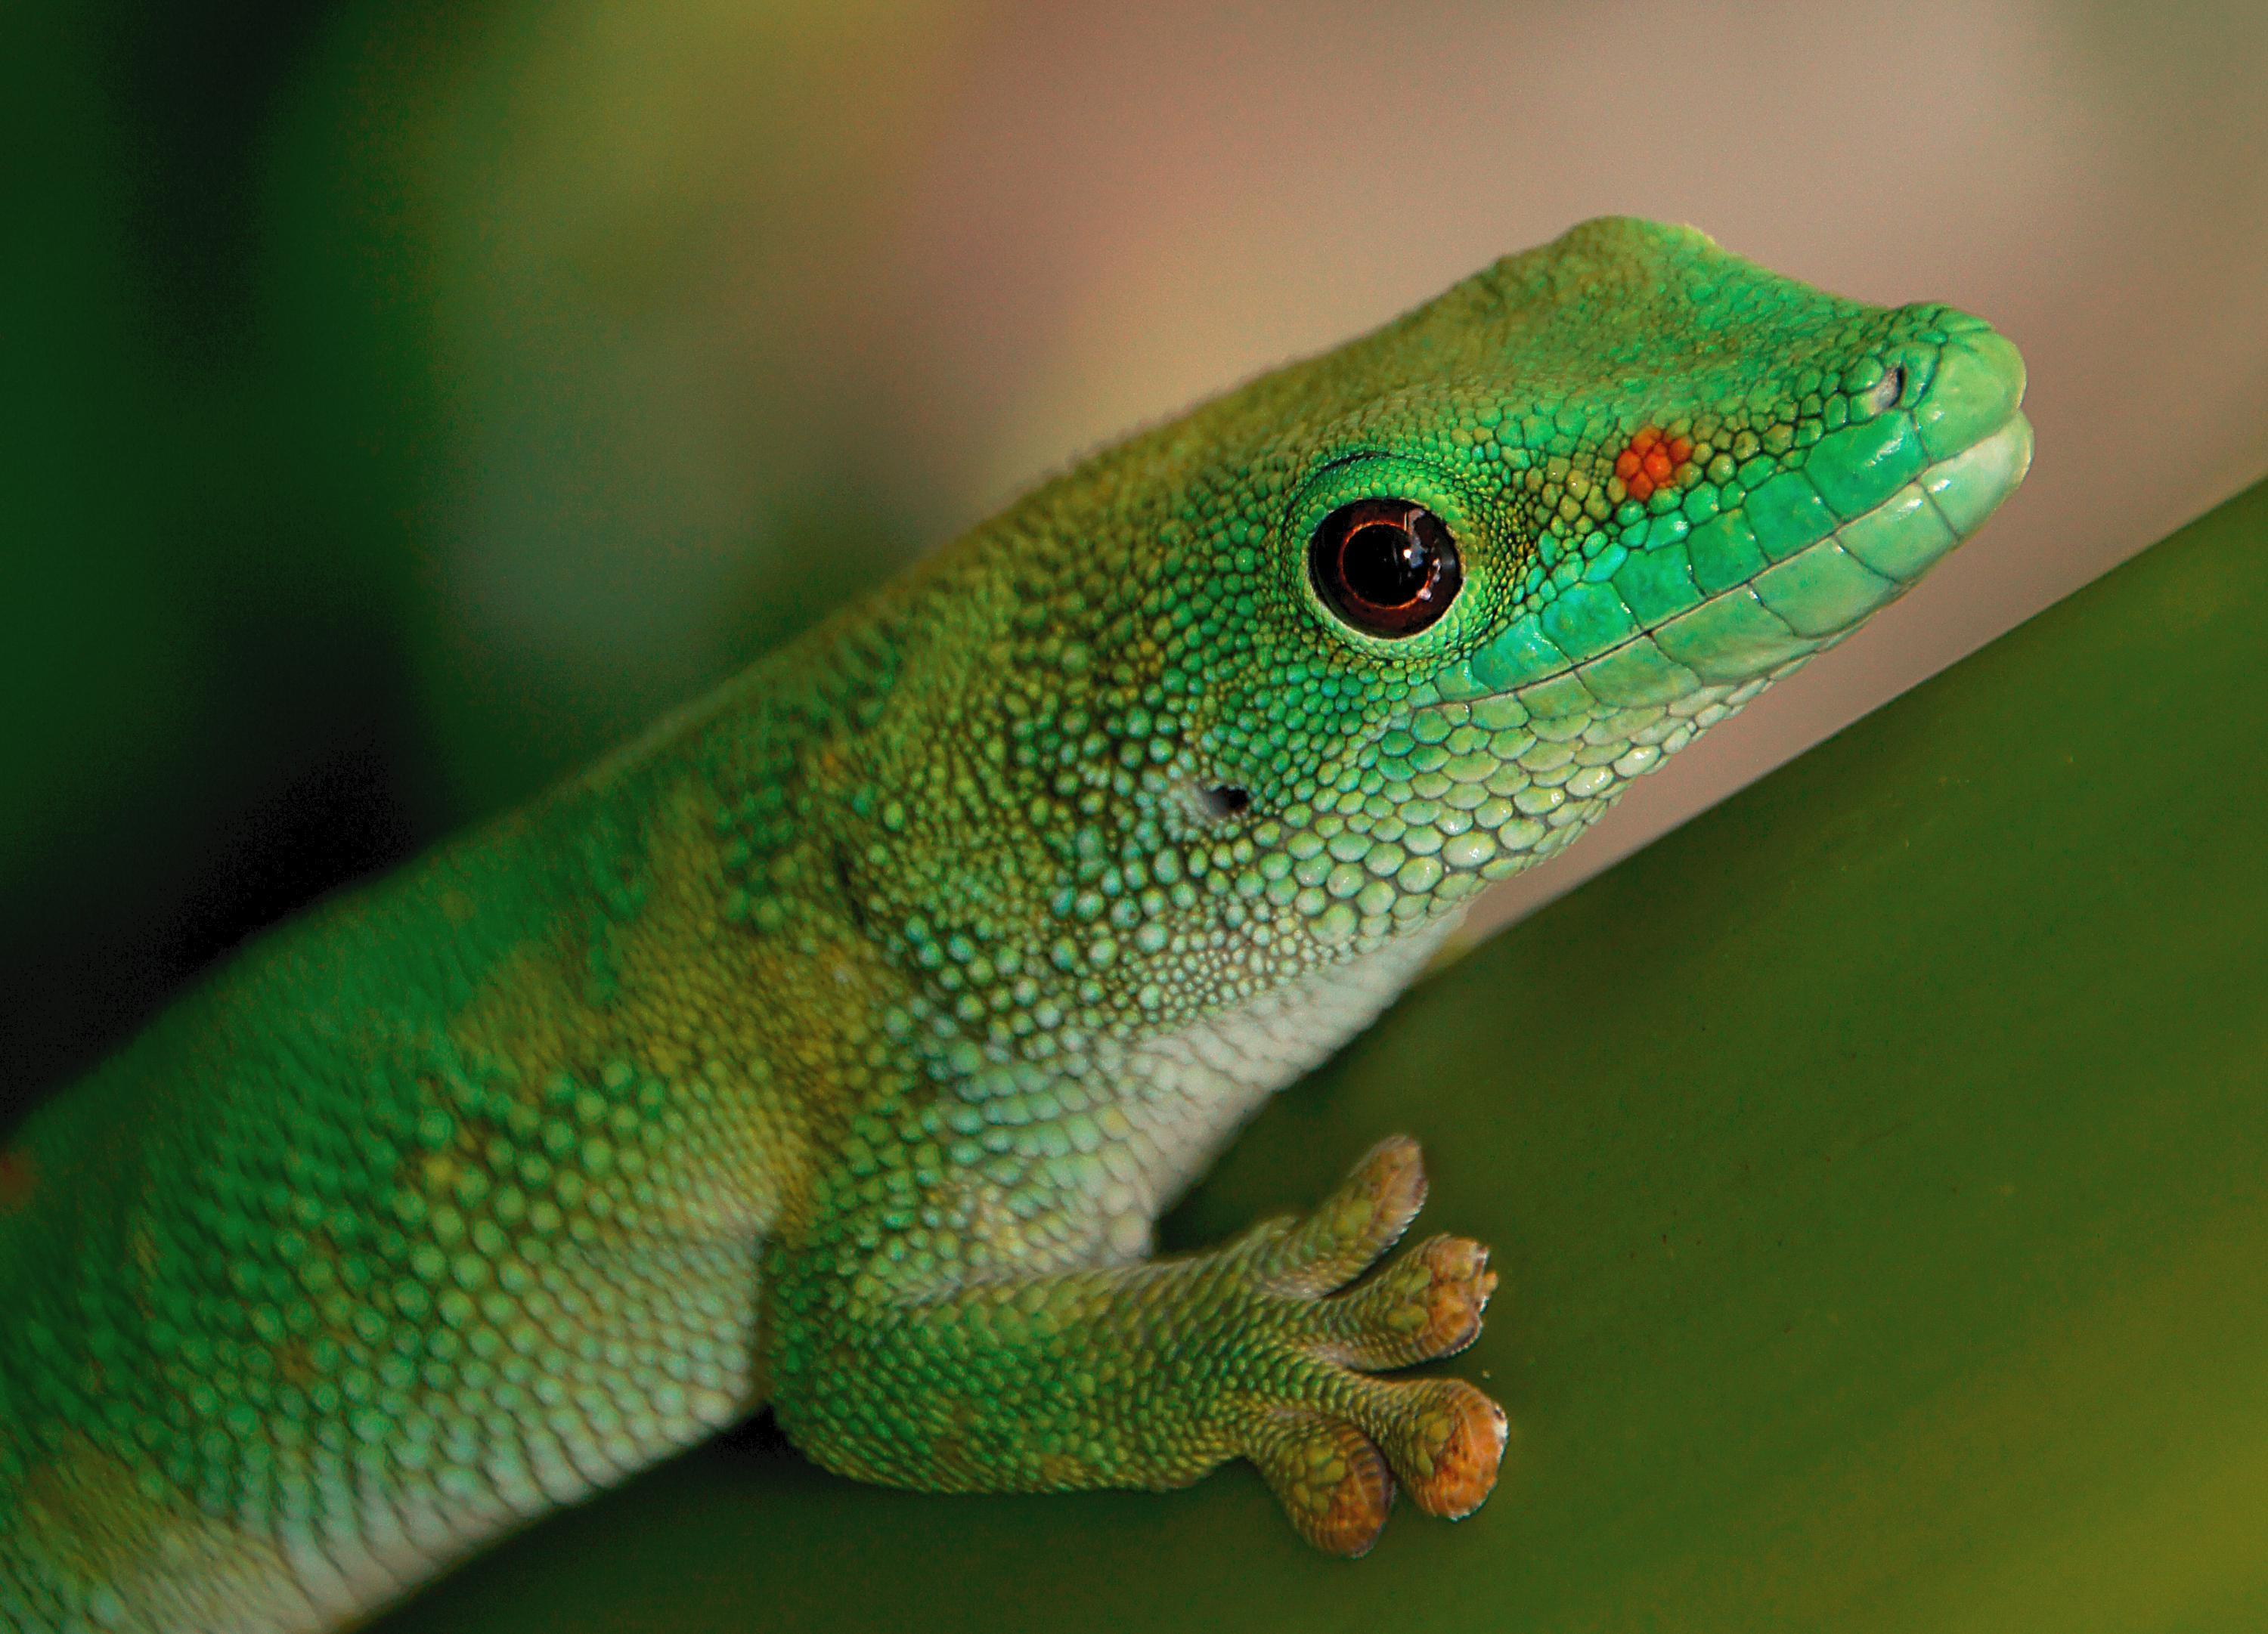 Free photo: Madagascan Day Gecko., Public Domain